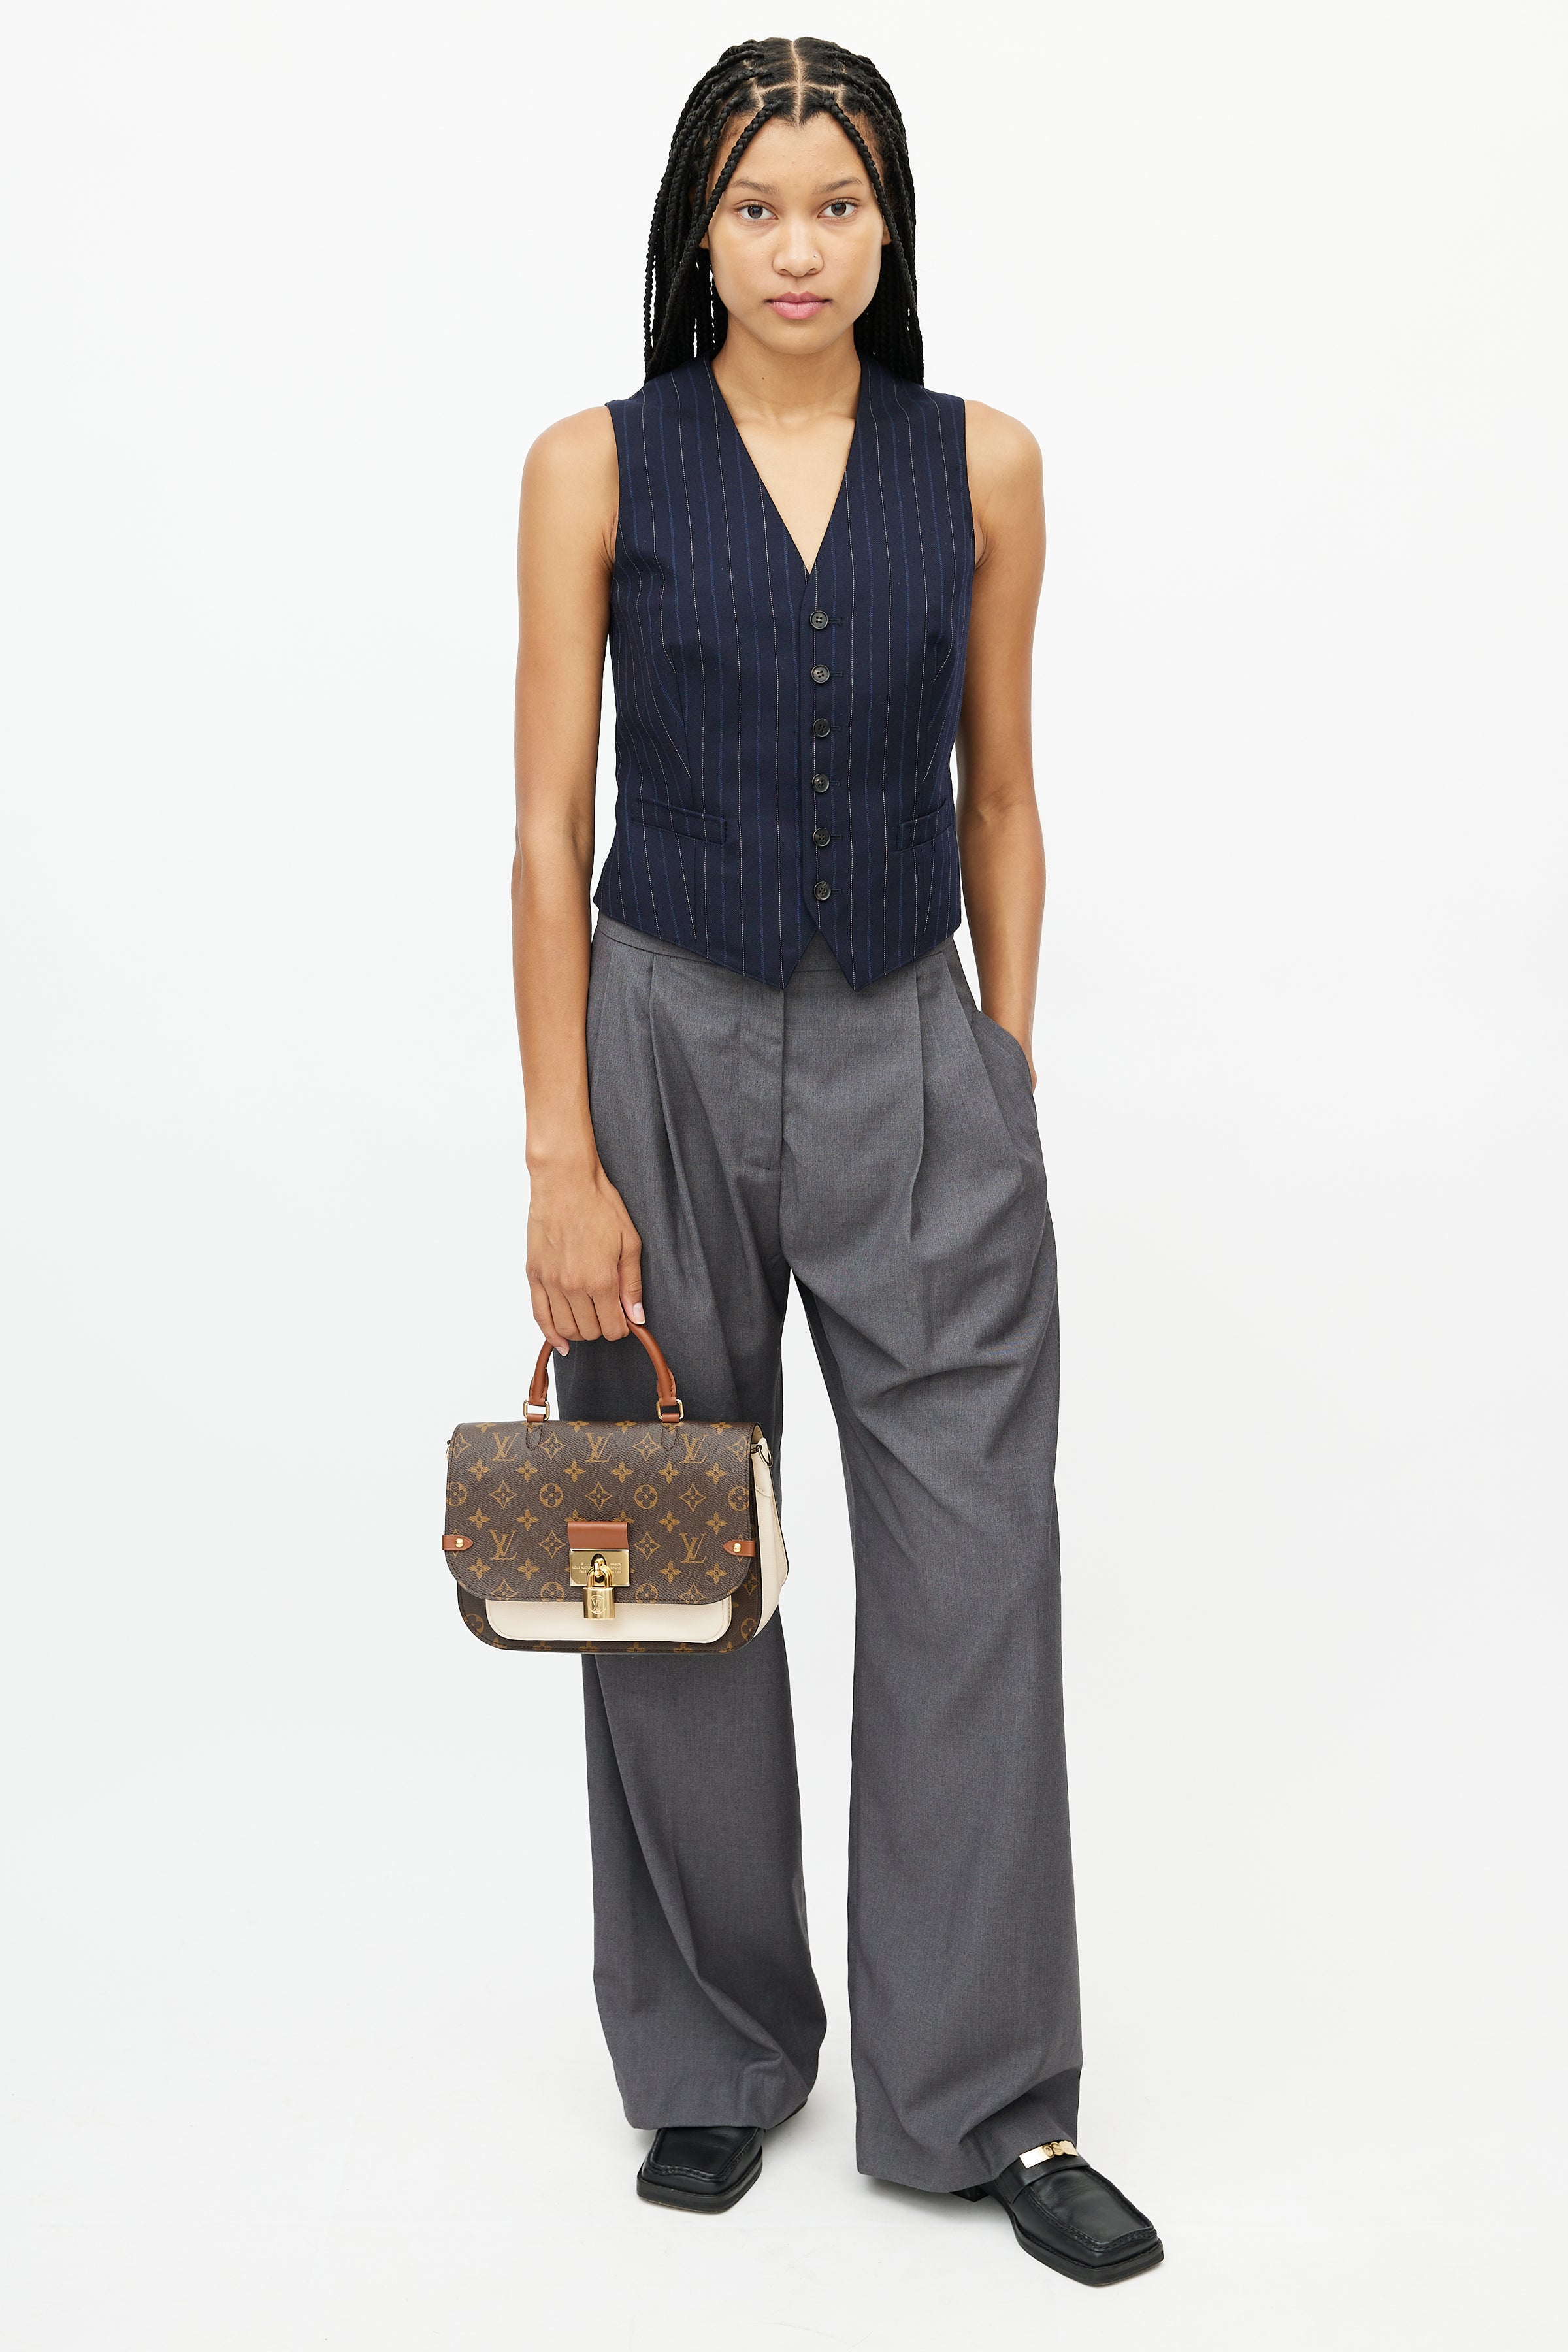 Louis Vuitton // Brown & Cream Vaurigard Monogram Bag – VSP Consignment